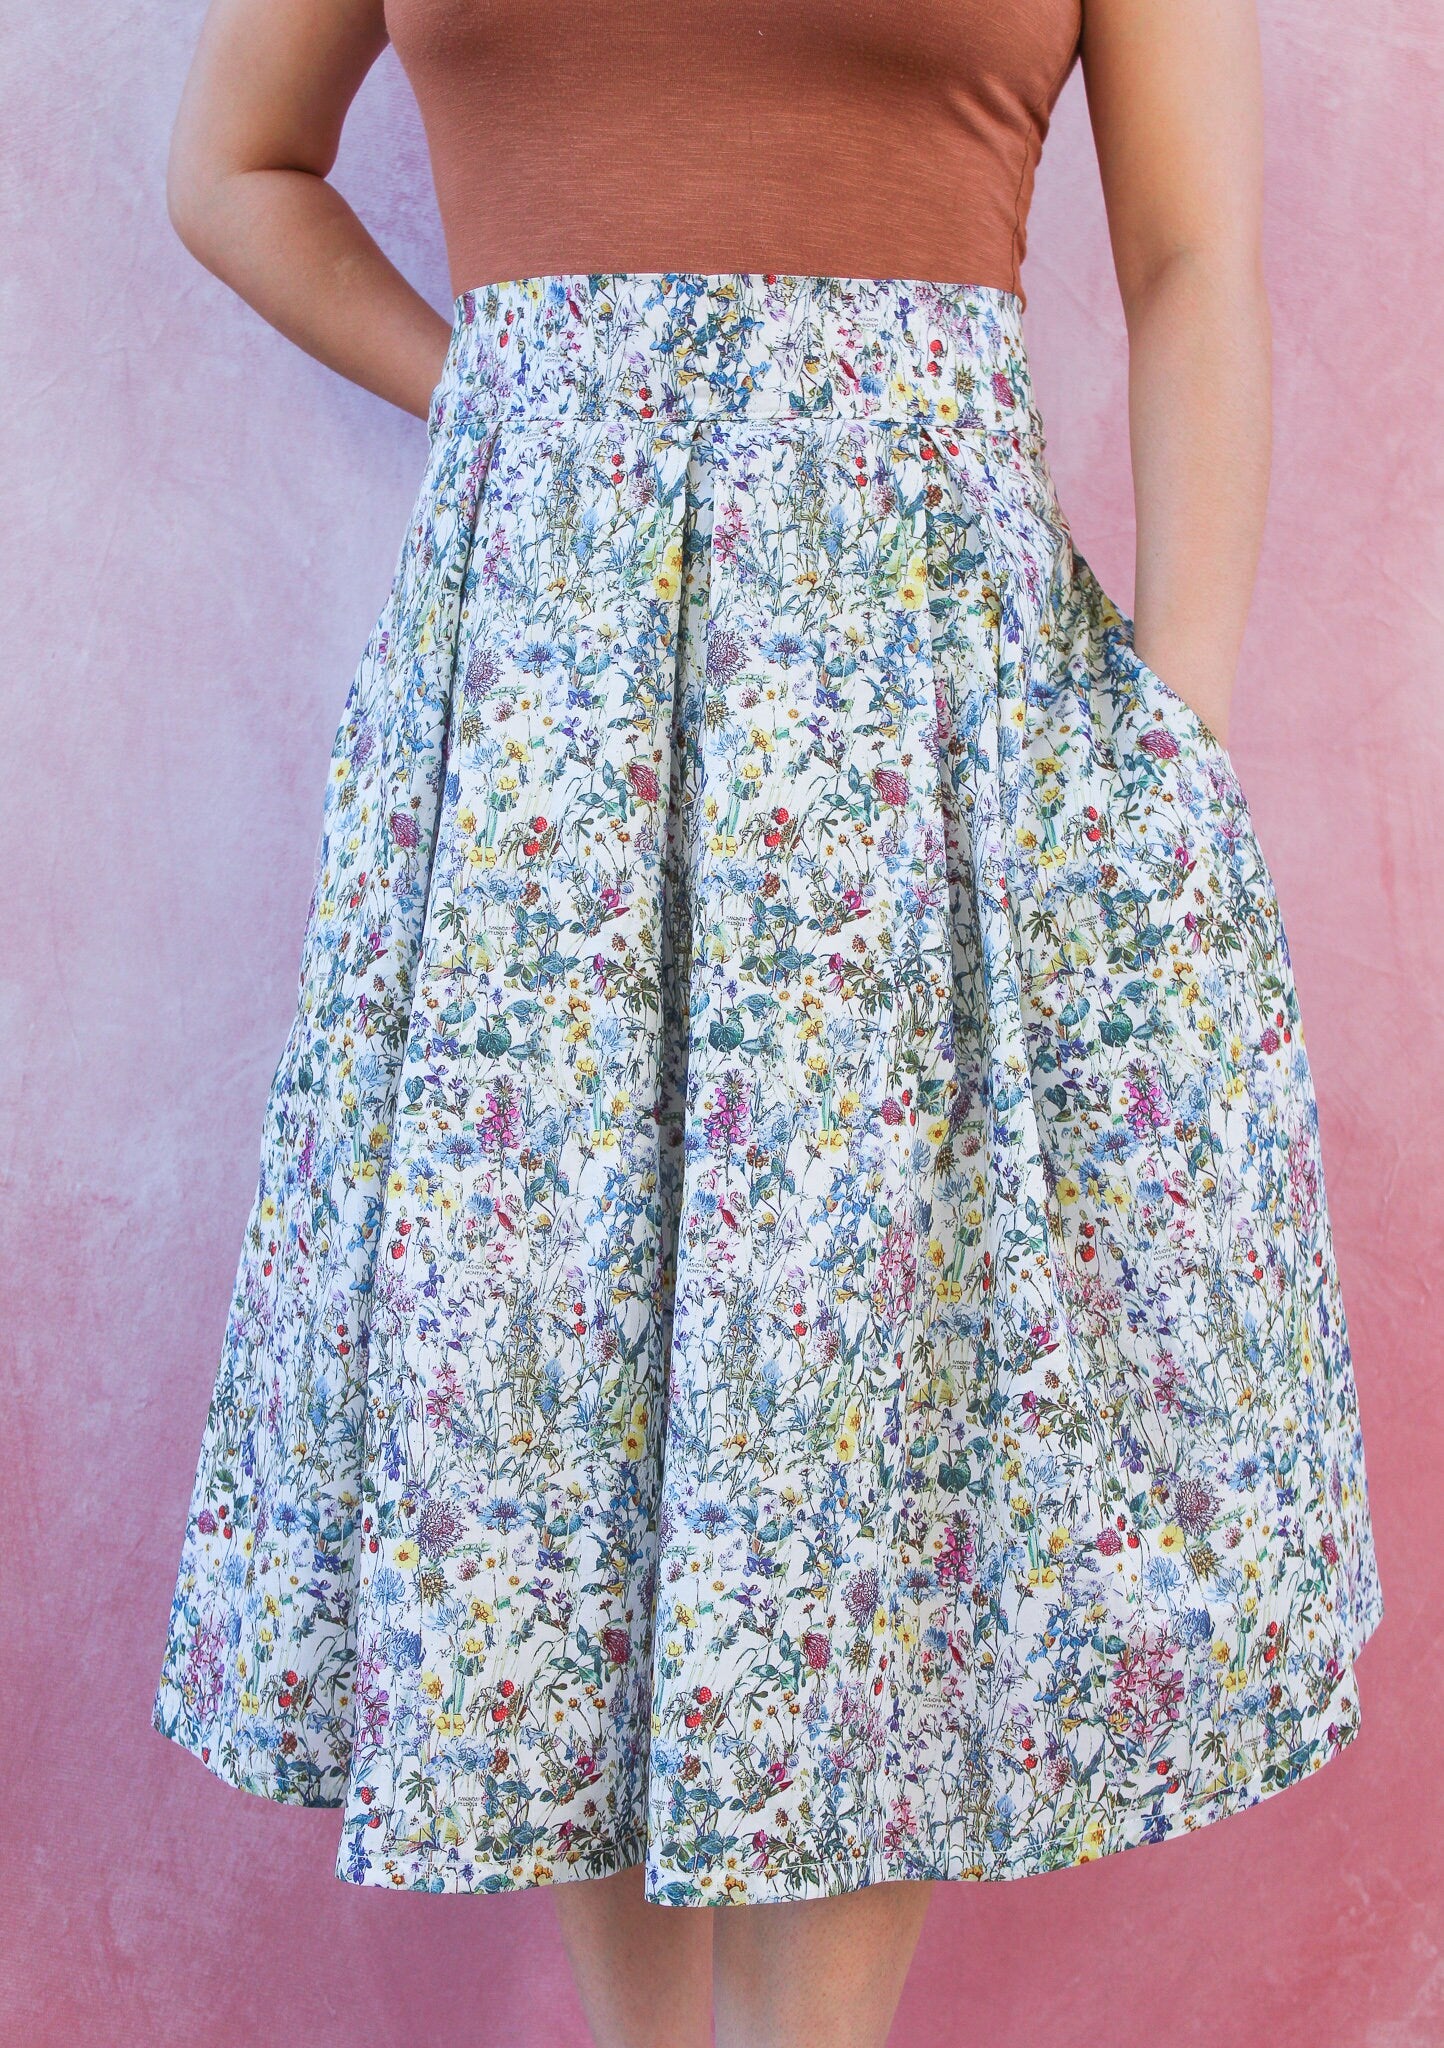 Liberty London Skirt | Cotton Plated Midi Skirt | Floral Cotton Midi Skirt | Botanical Skirt | Statement Patterned Skirt | Printed Skirt